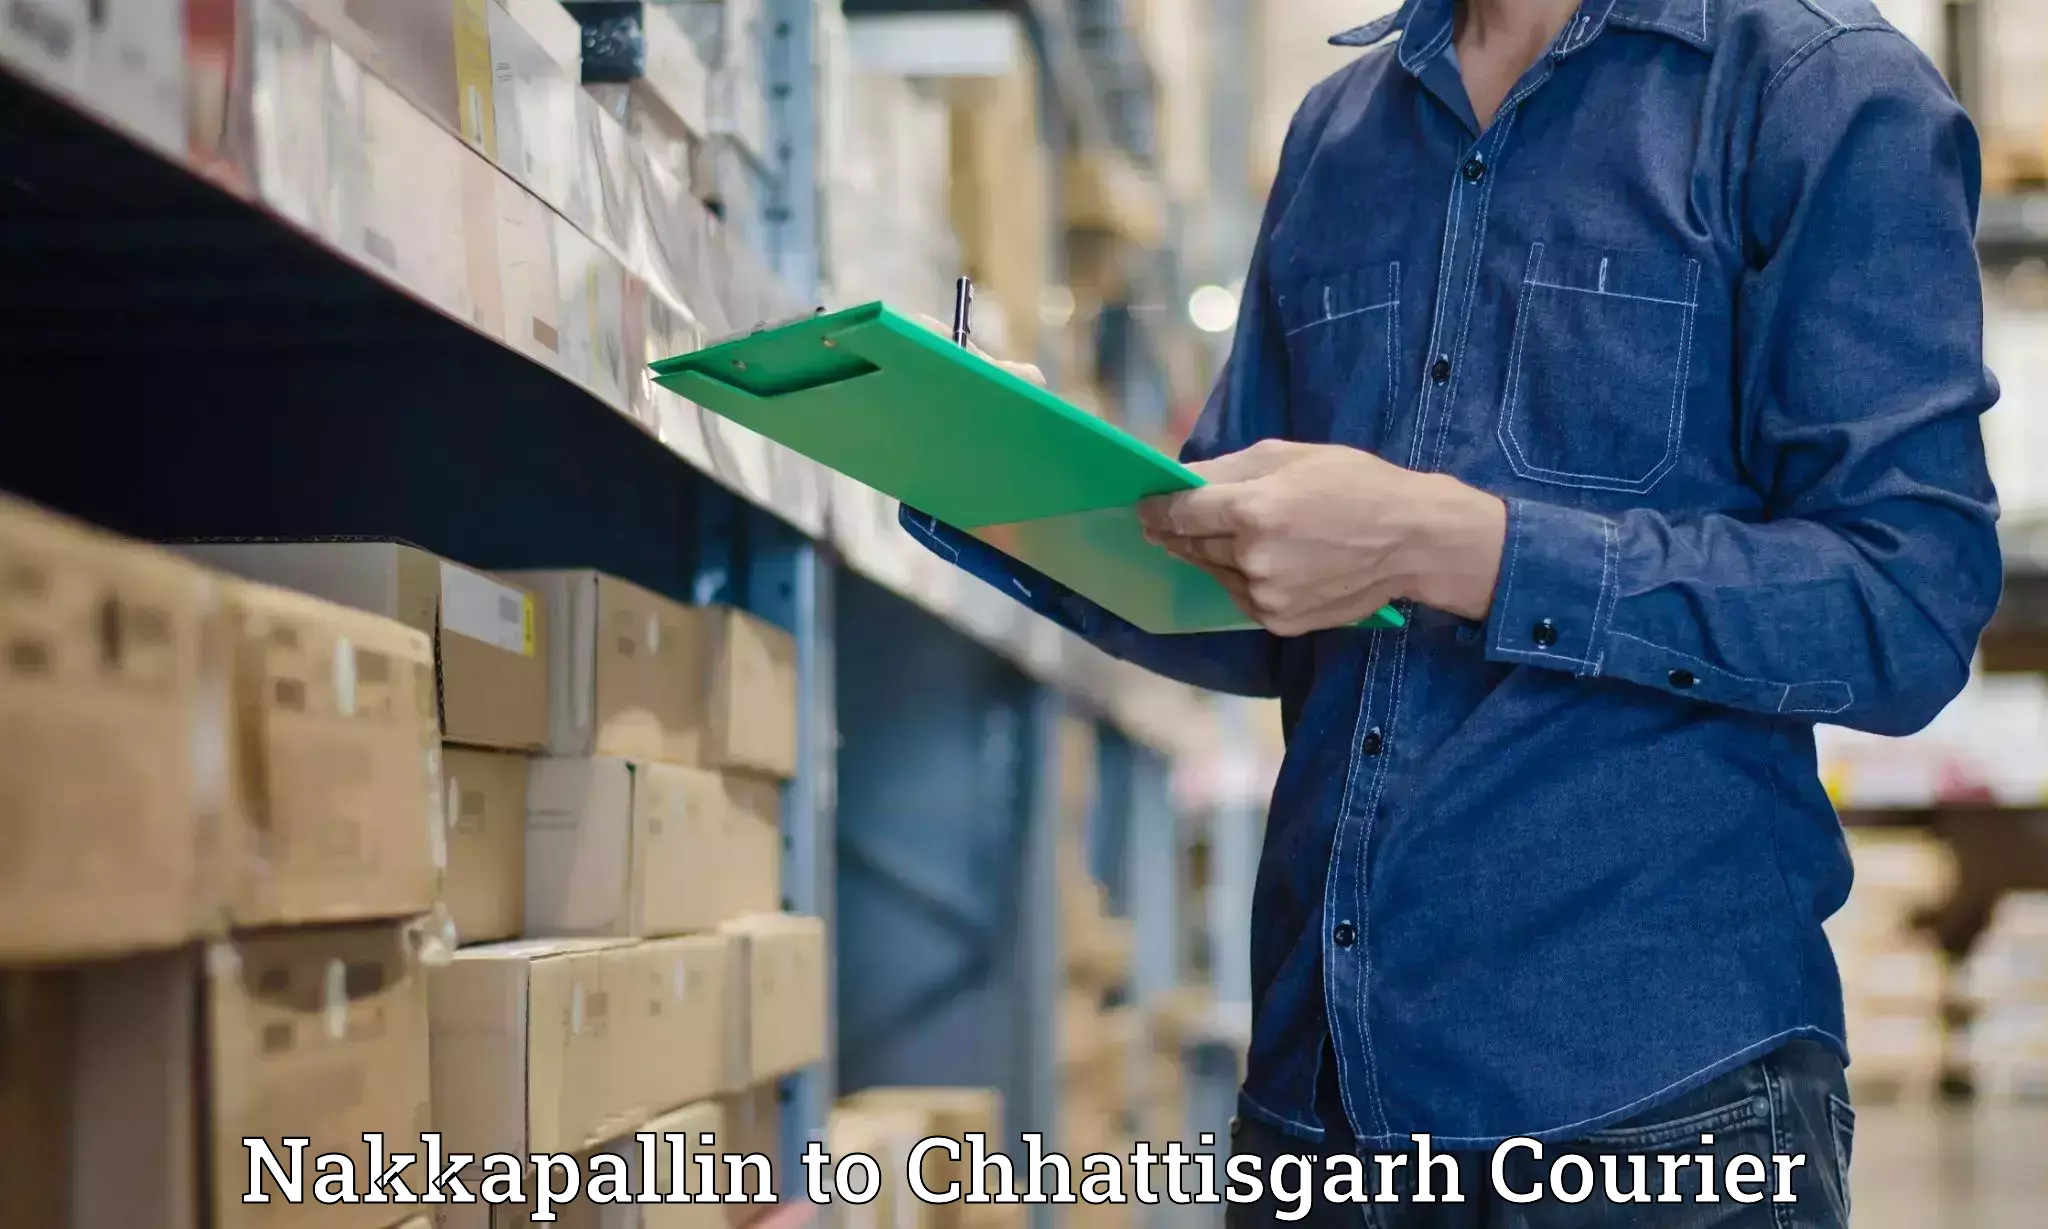 Global logistics network Nakkapallin to bagbahra